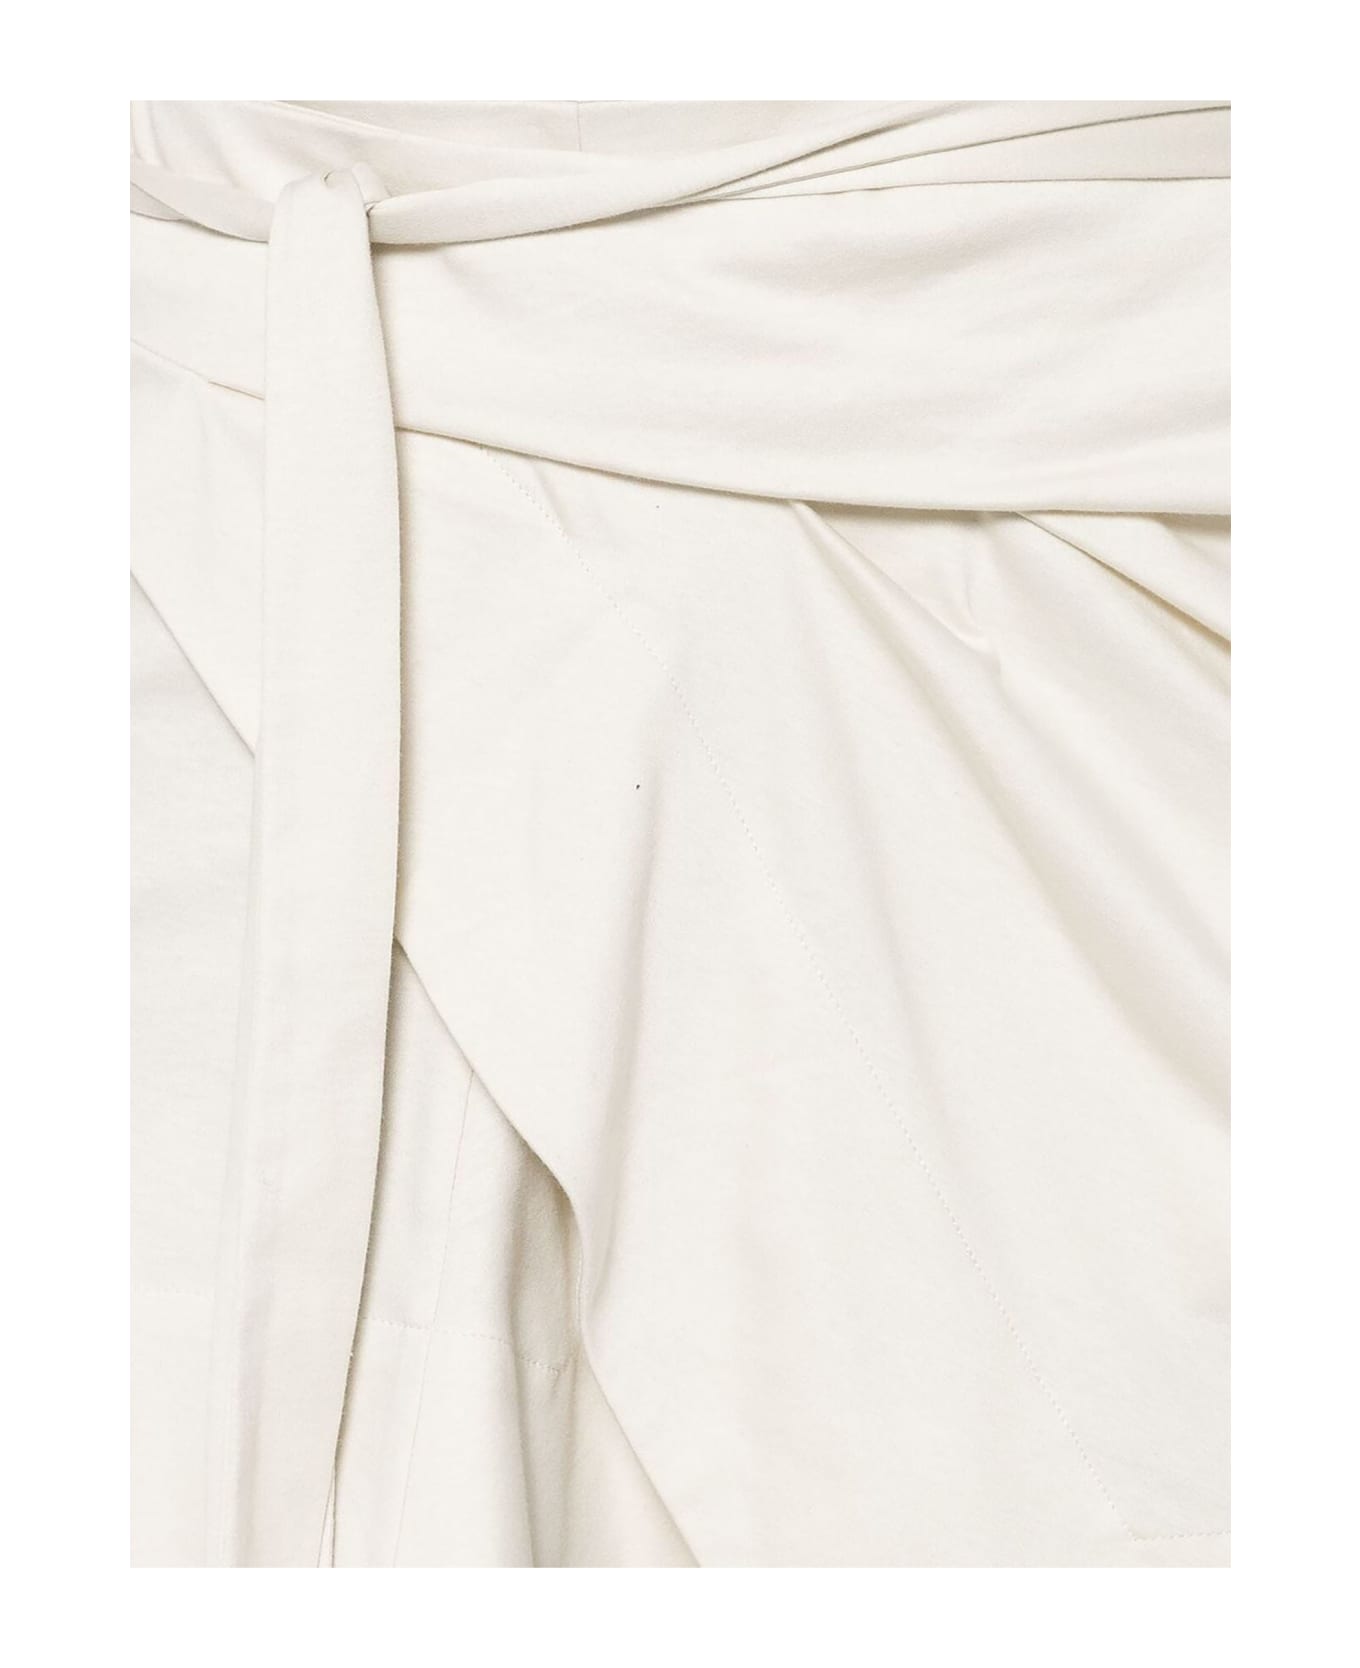 Isabel Marant Berenice Wrap Cotton Skirt - Beige